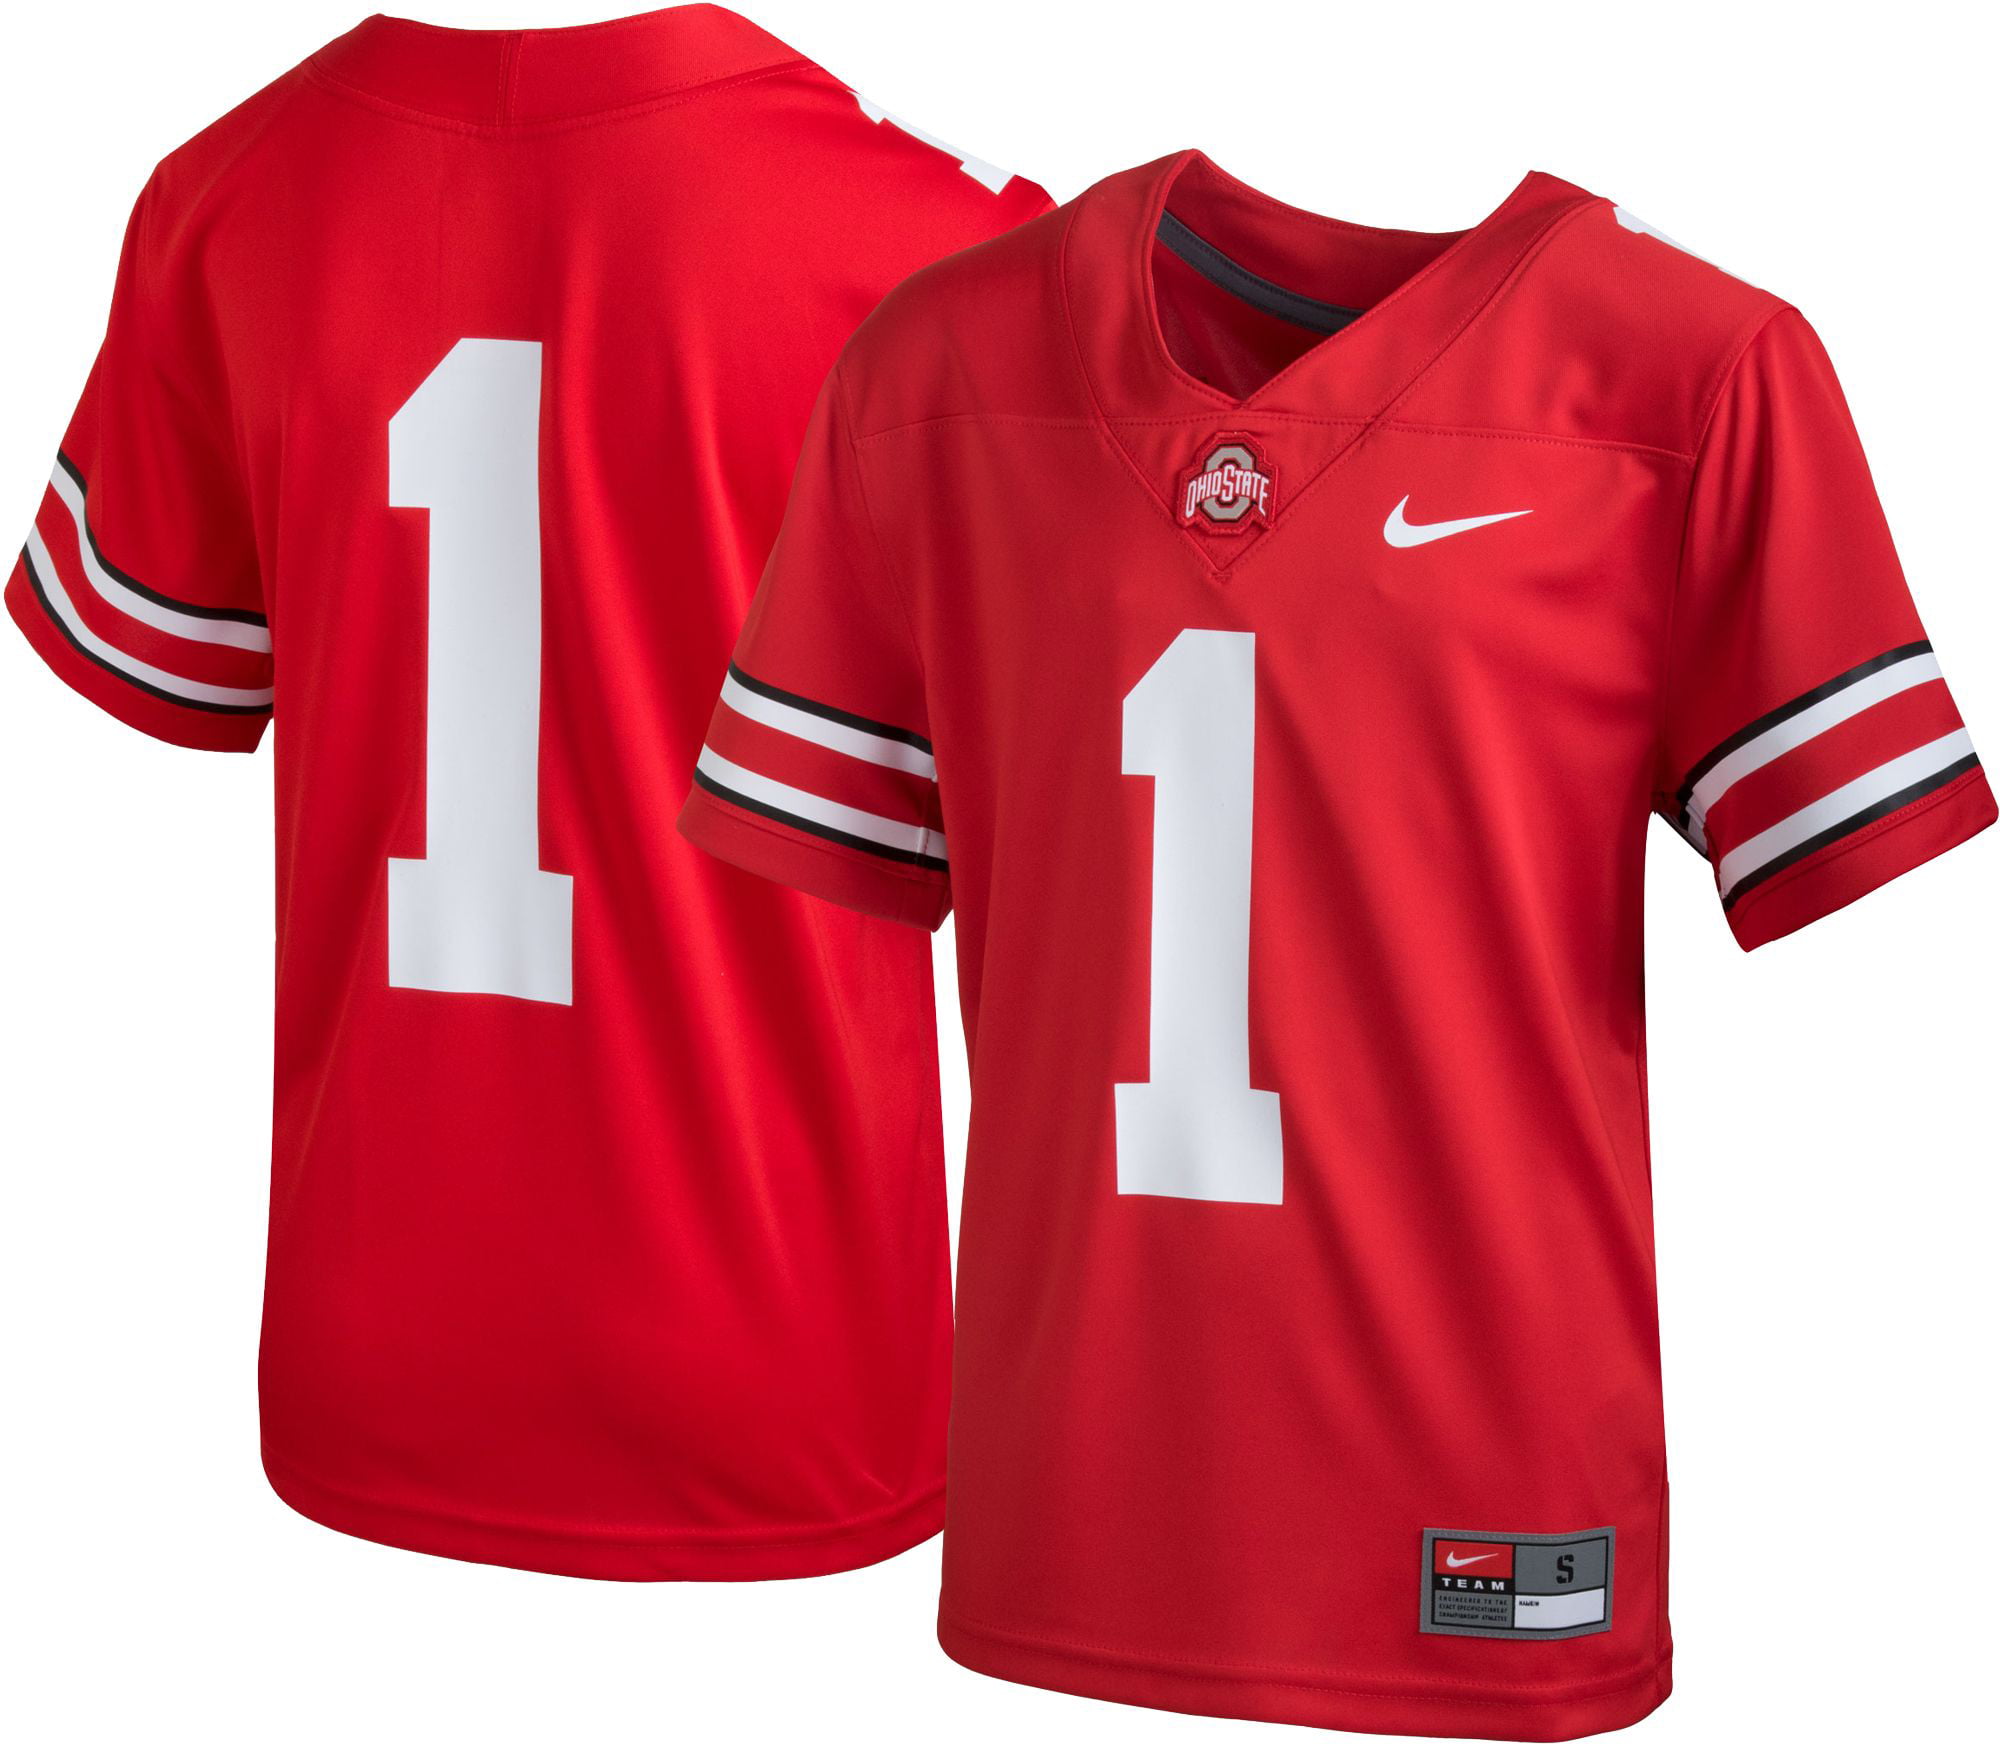 Nike Youth Ohio State Buckeyes #1 Scarlet Replica Football Jersey ...